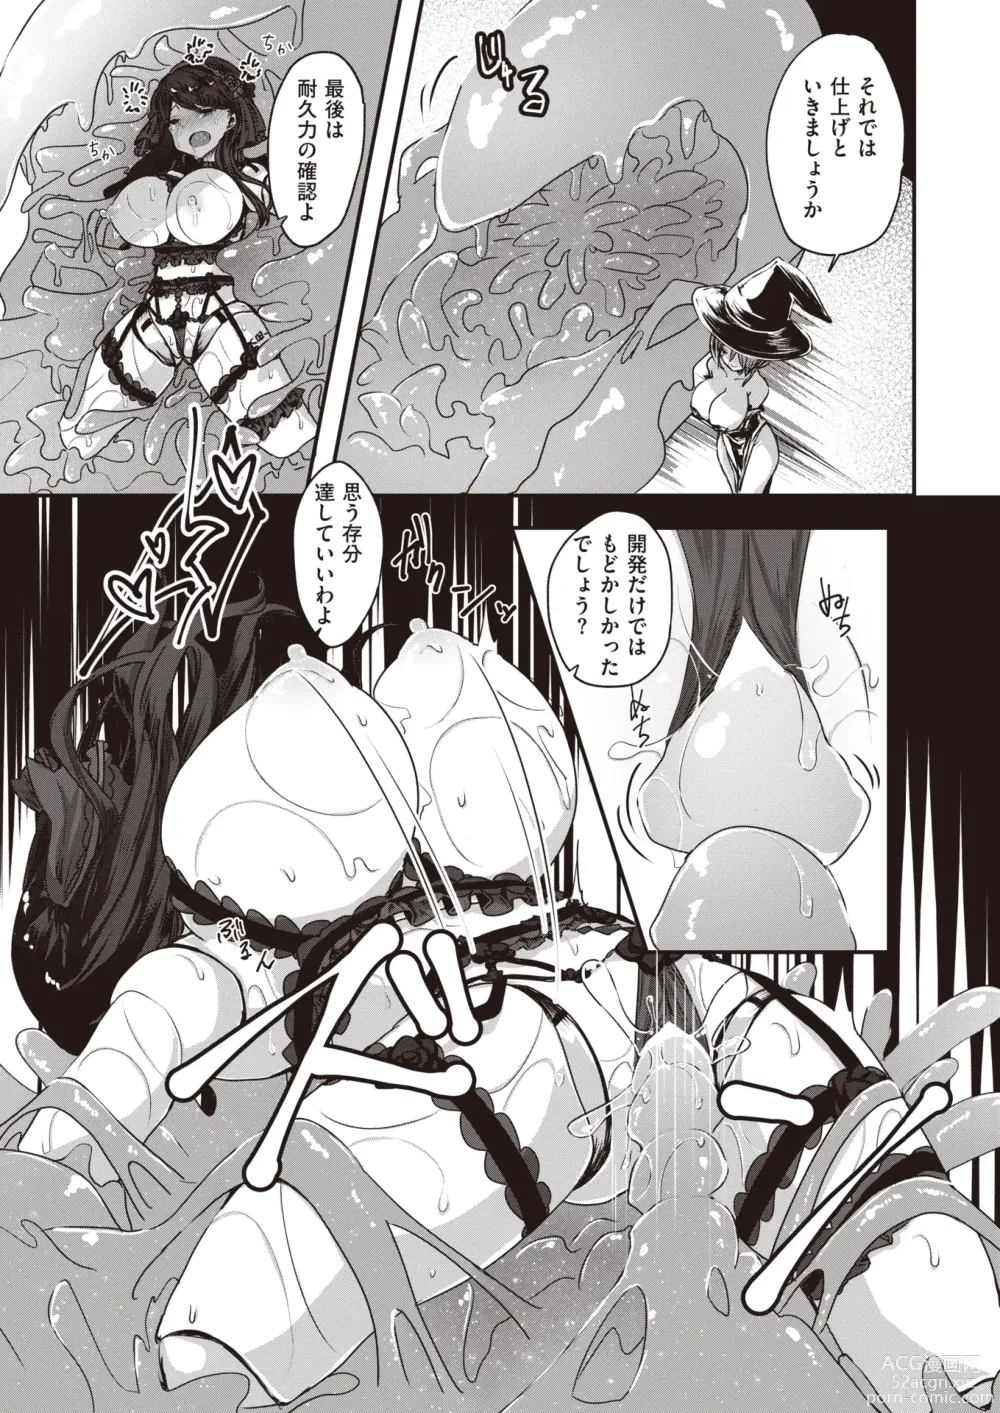 Page 94 of manga Isekai Rakuten Vol. 27